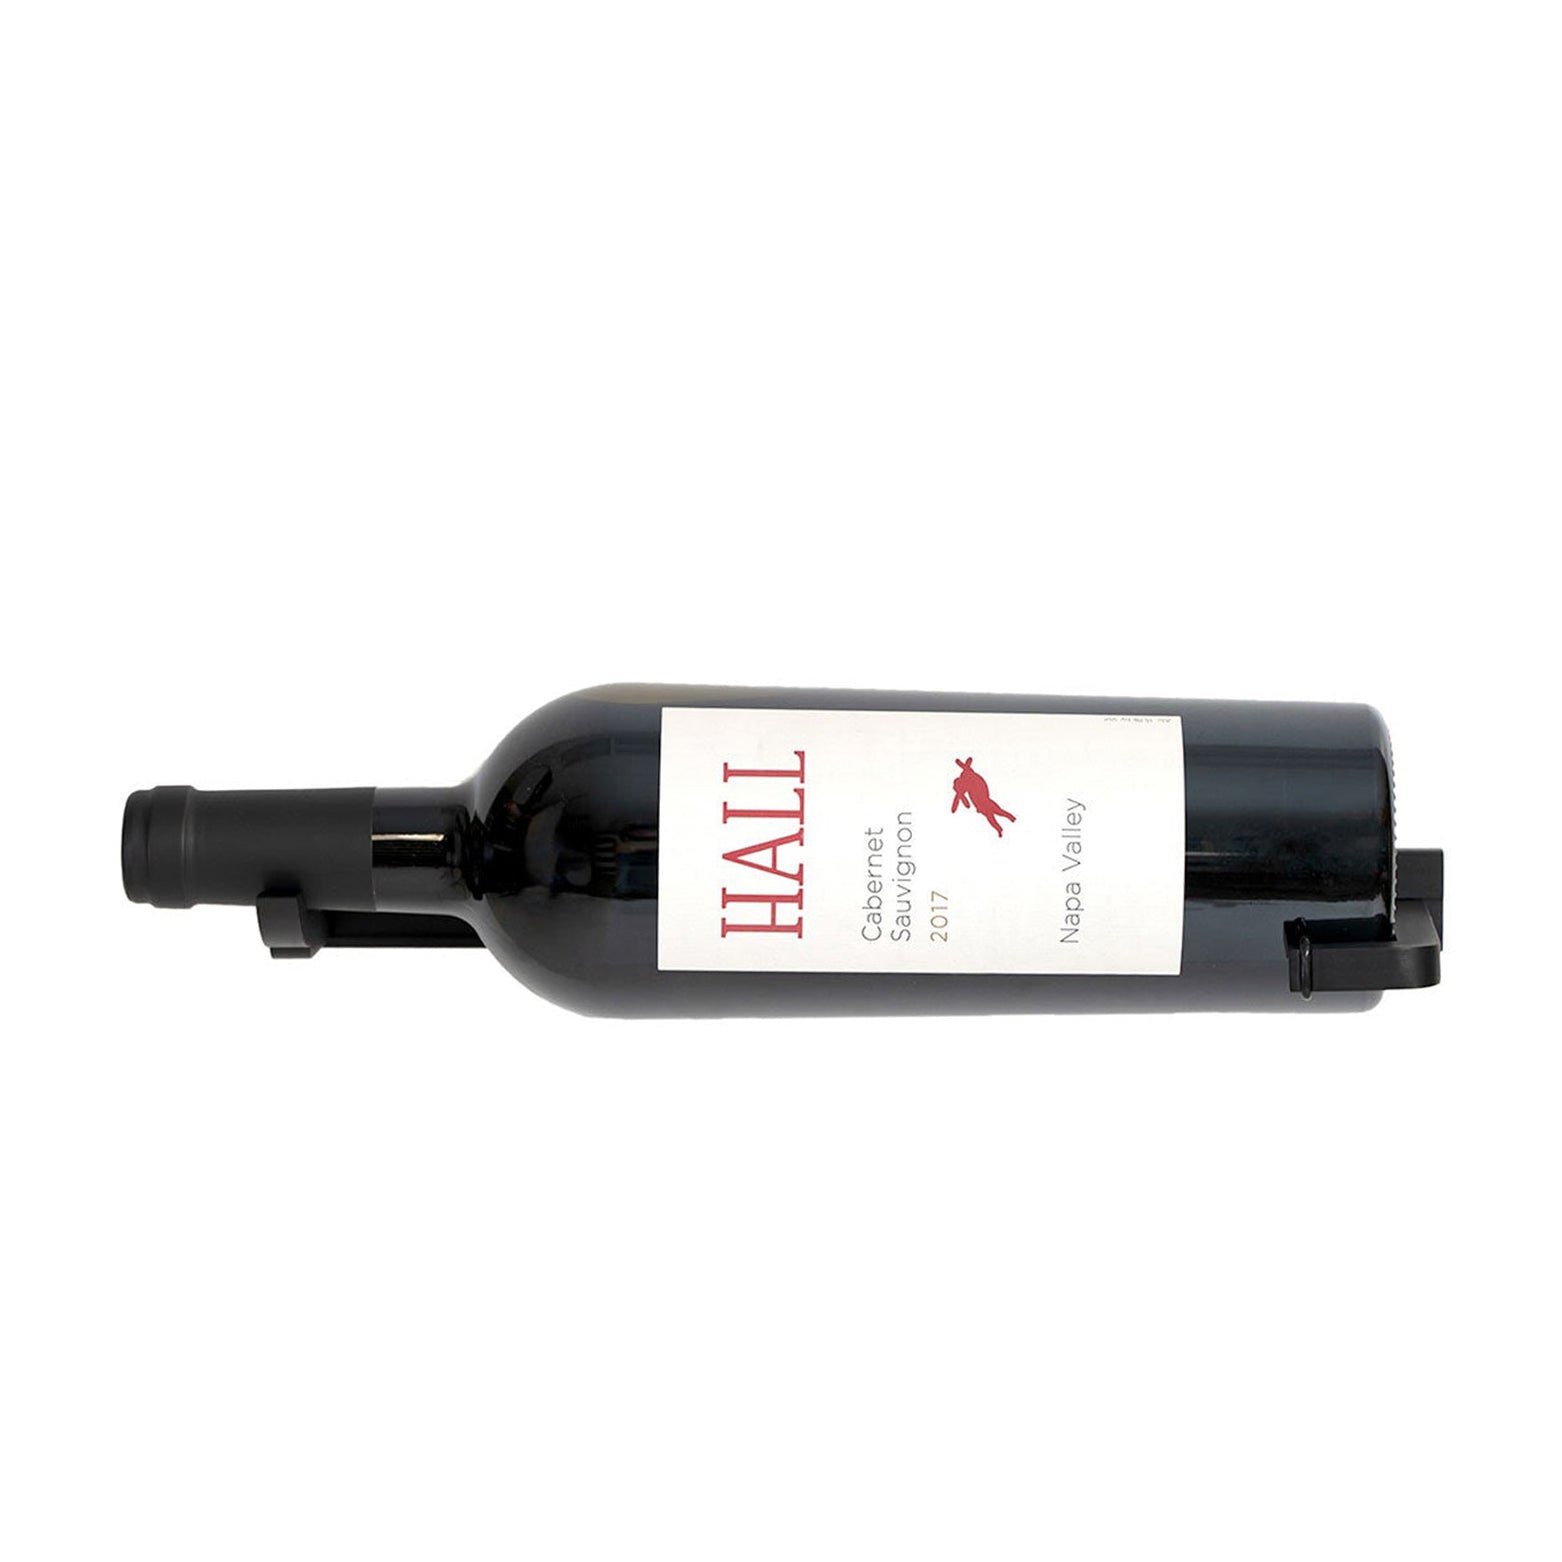 Decorative Wine Hardware - Sold in sets of 3 units (3 bottles)